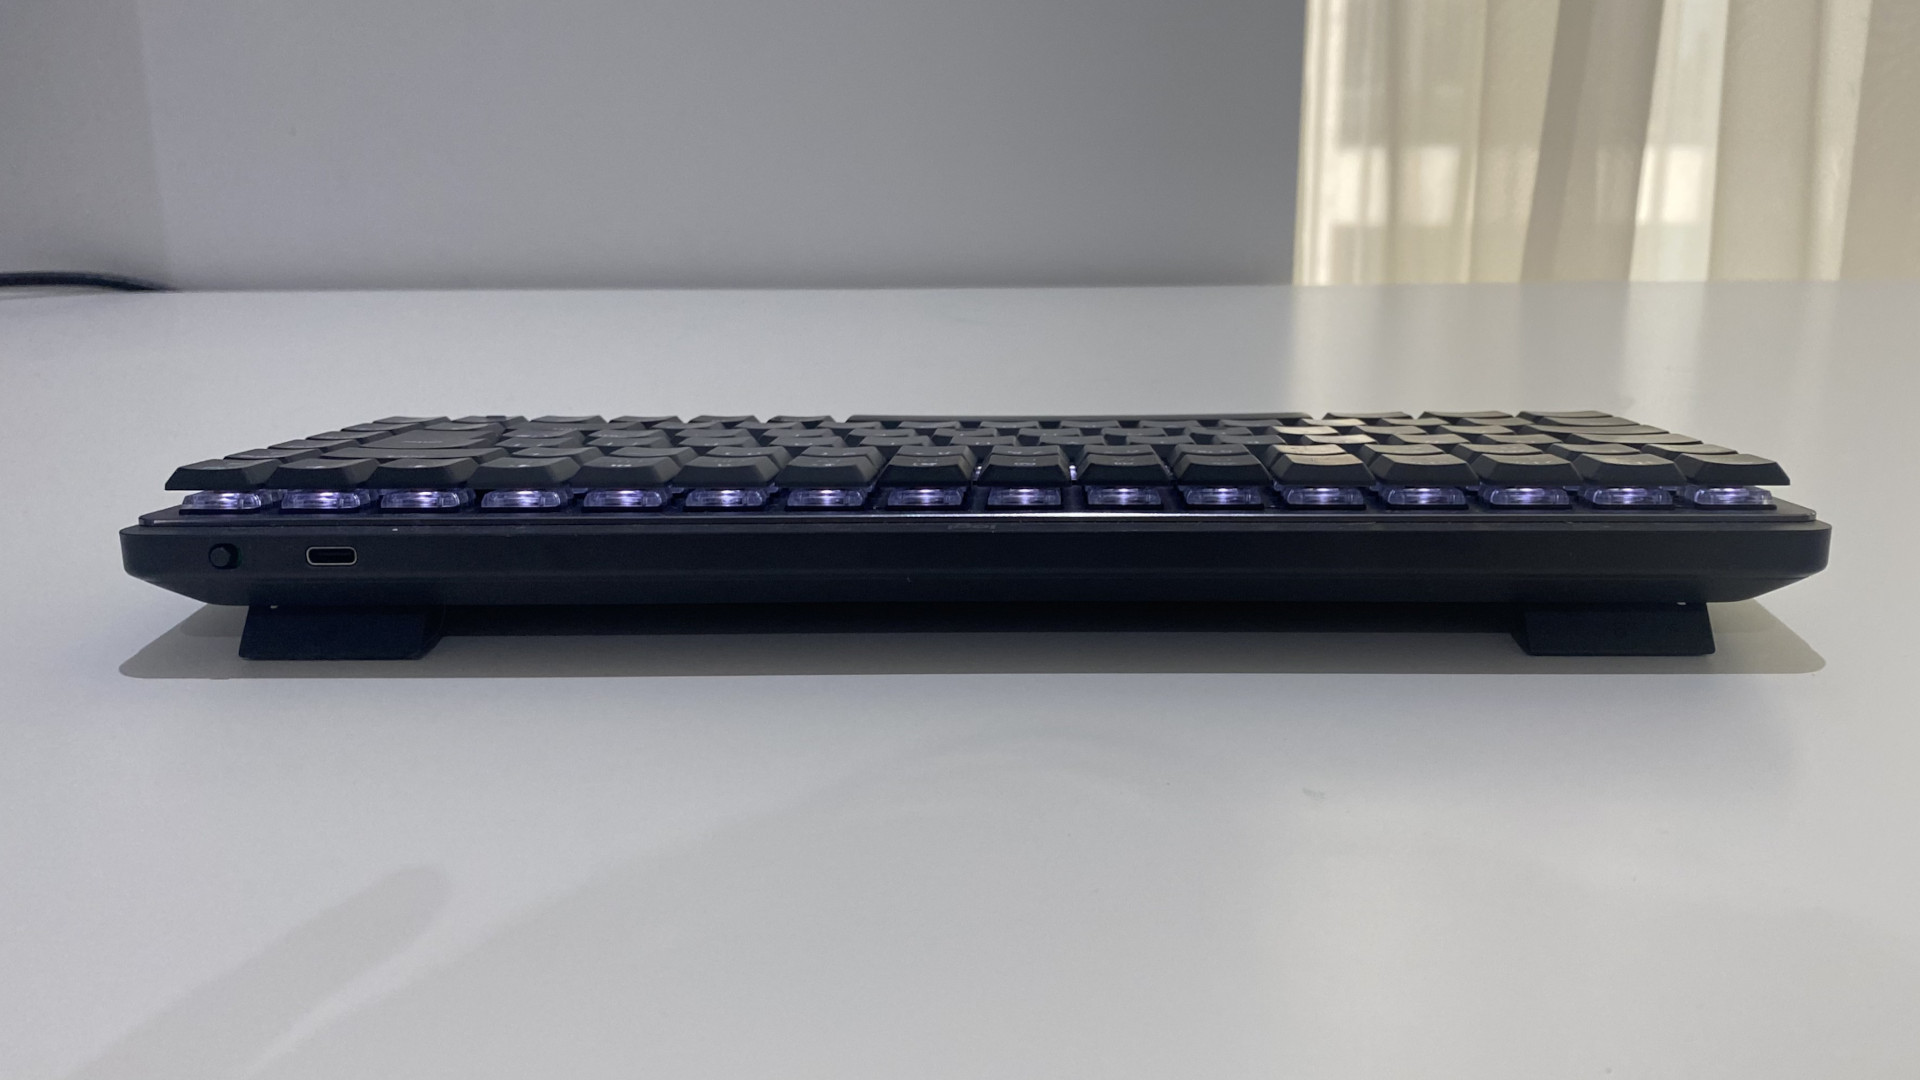 The Logitech MX Mechanical Mini Wireless Keyboard on a white table